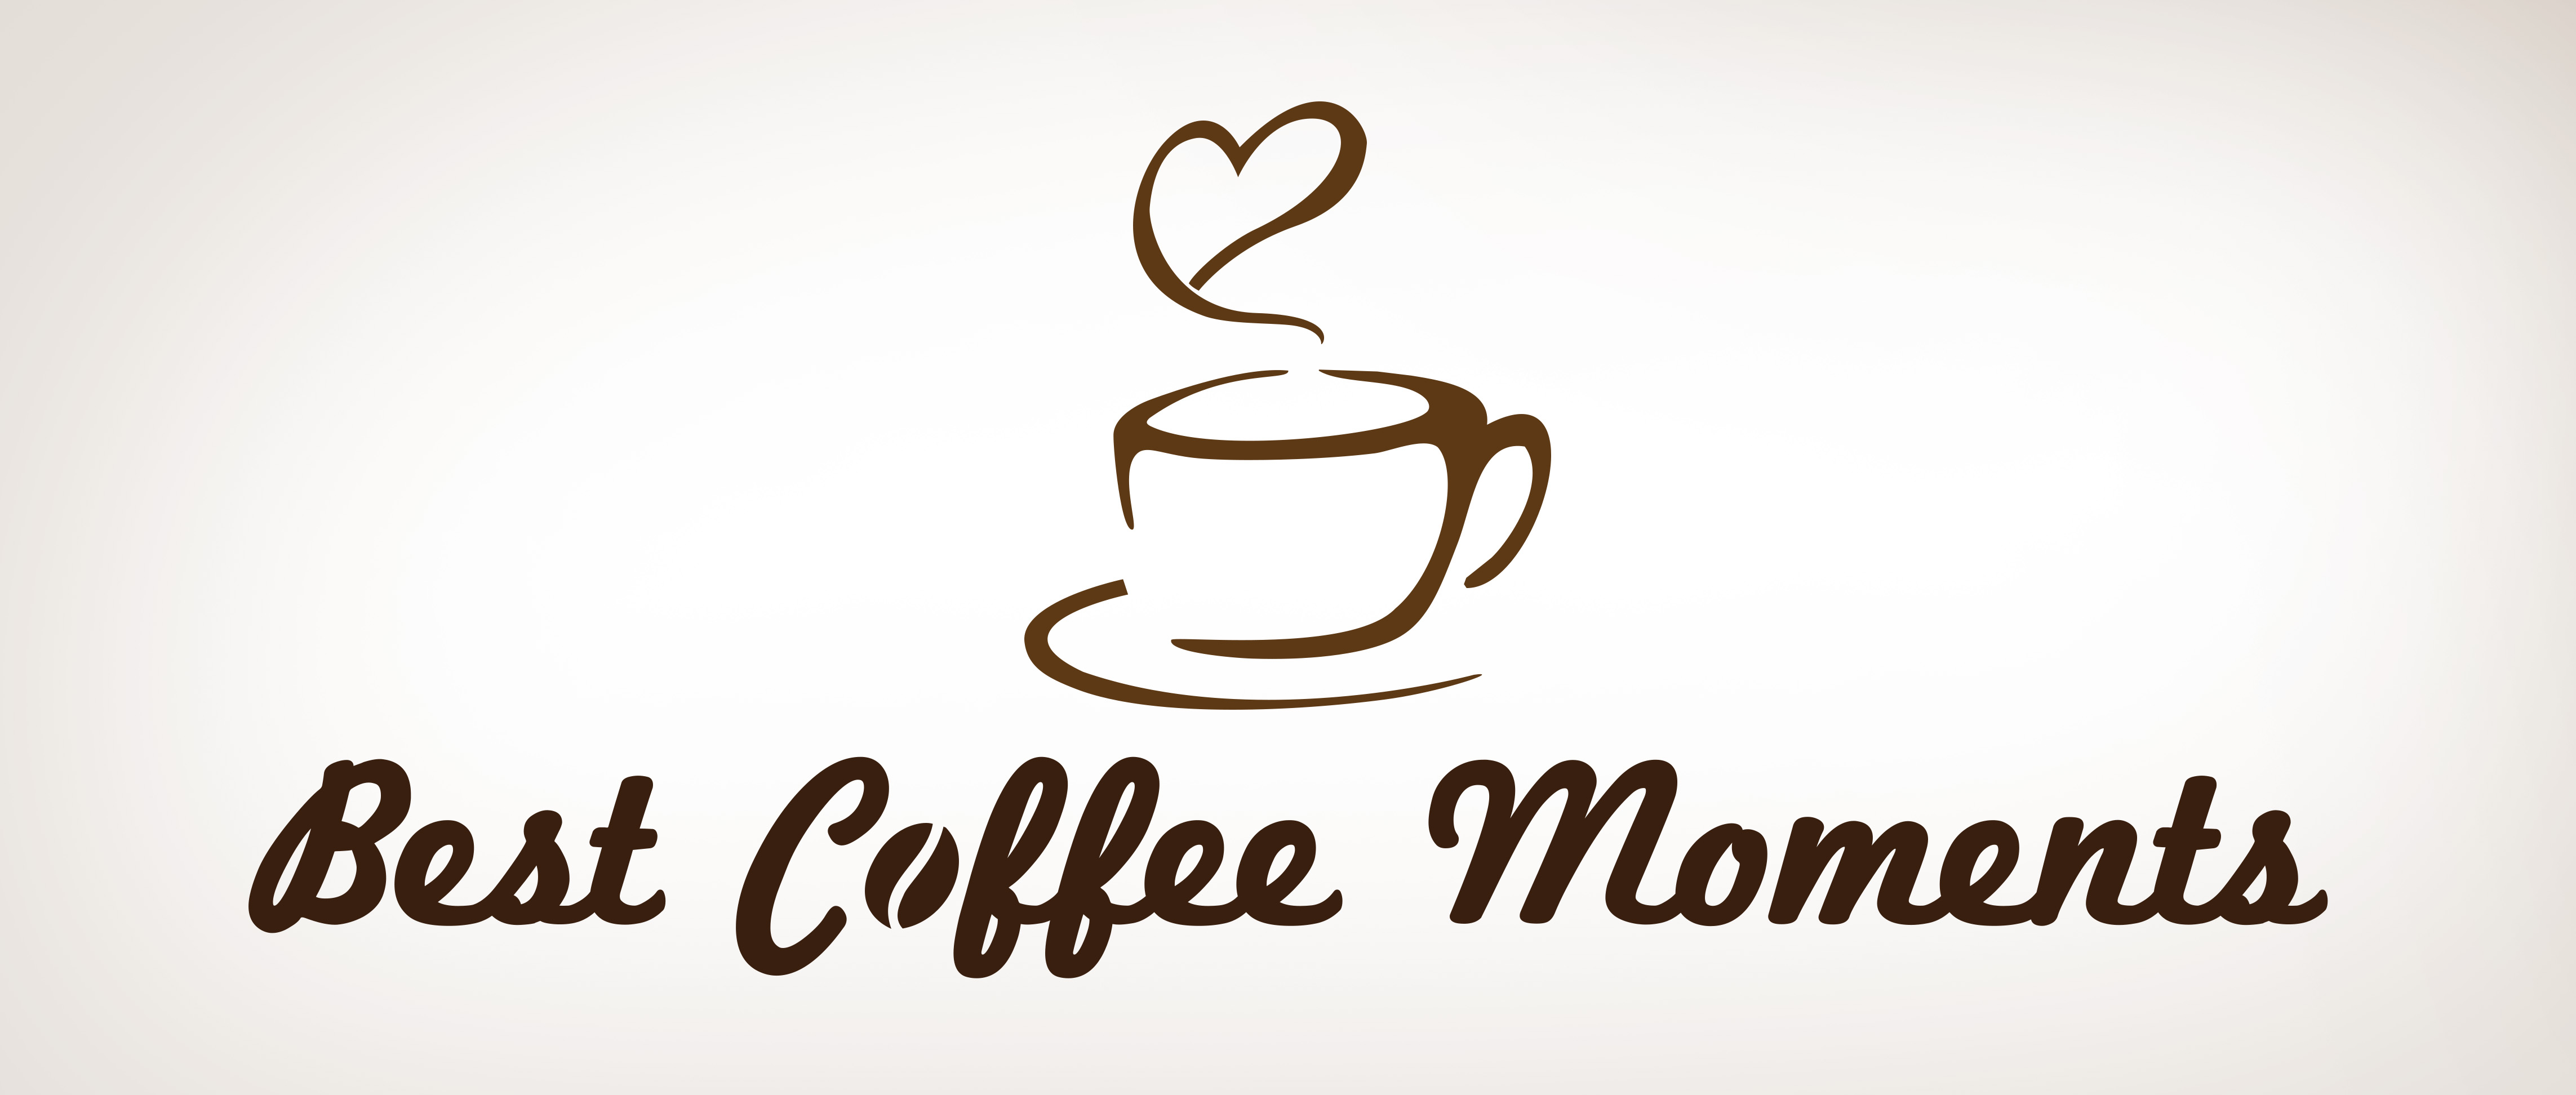 Best Coffee Moments logo